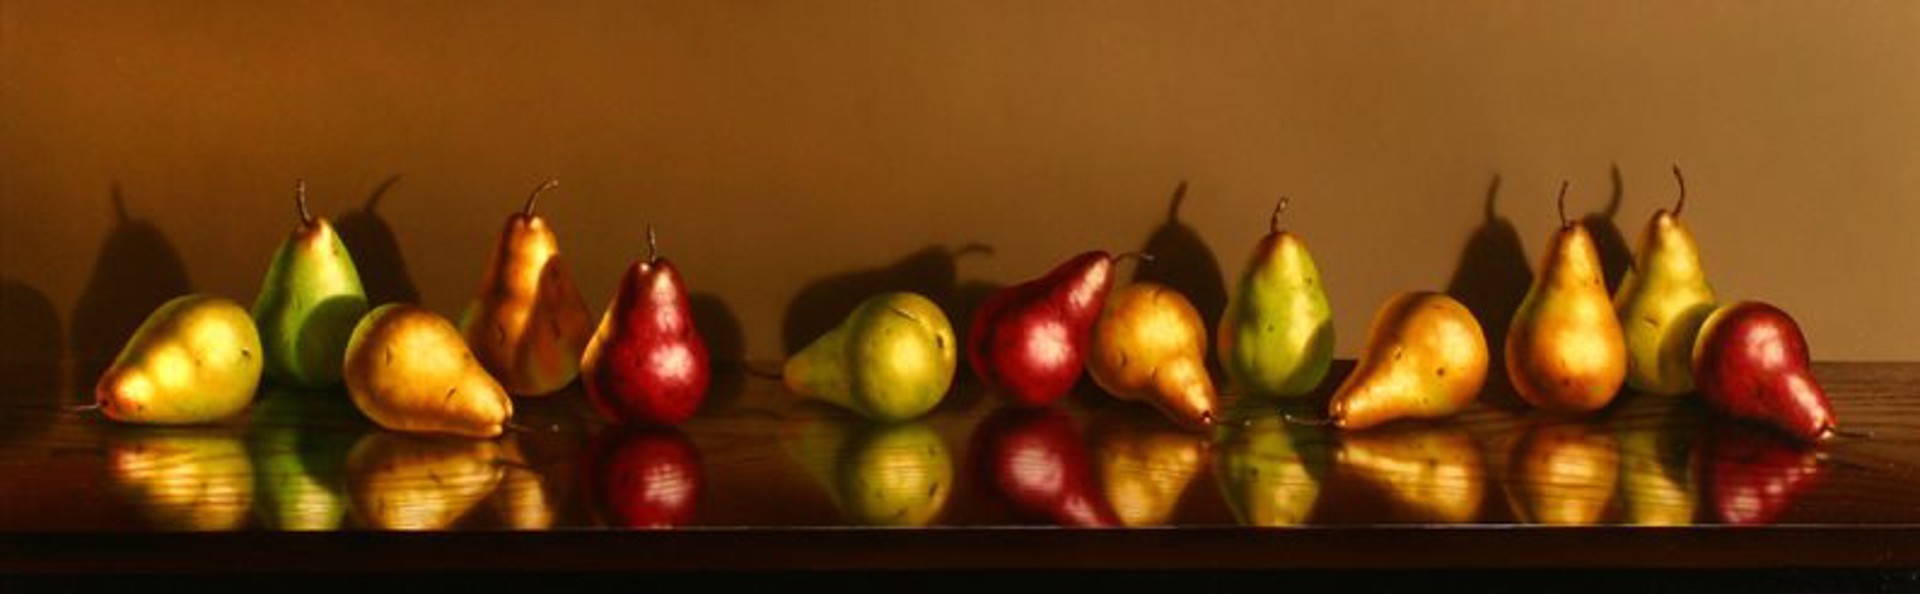 Thirteen Pears by Otto Duecker